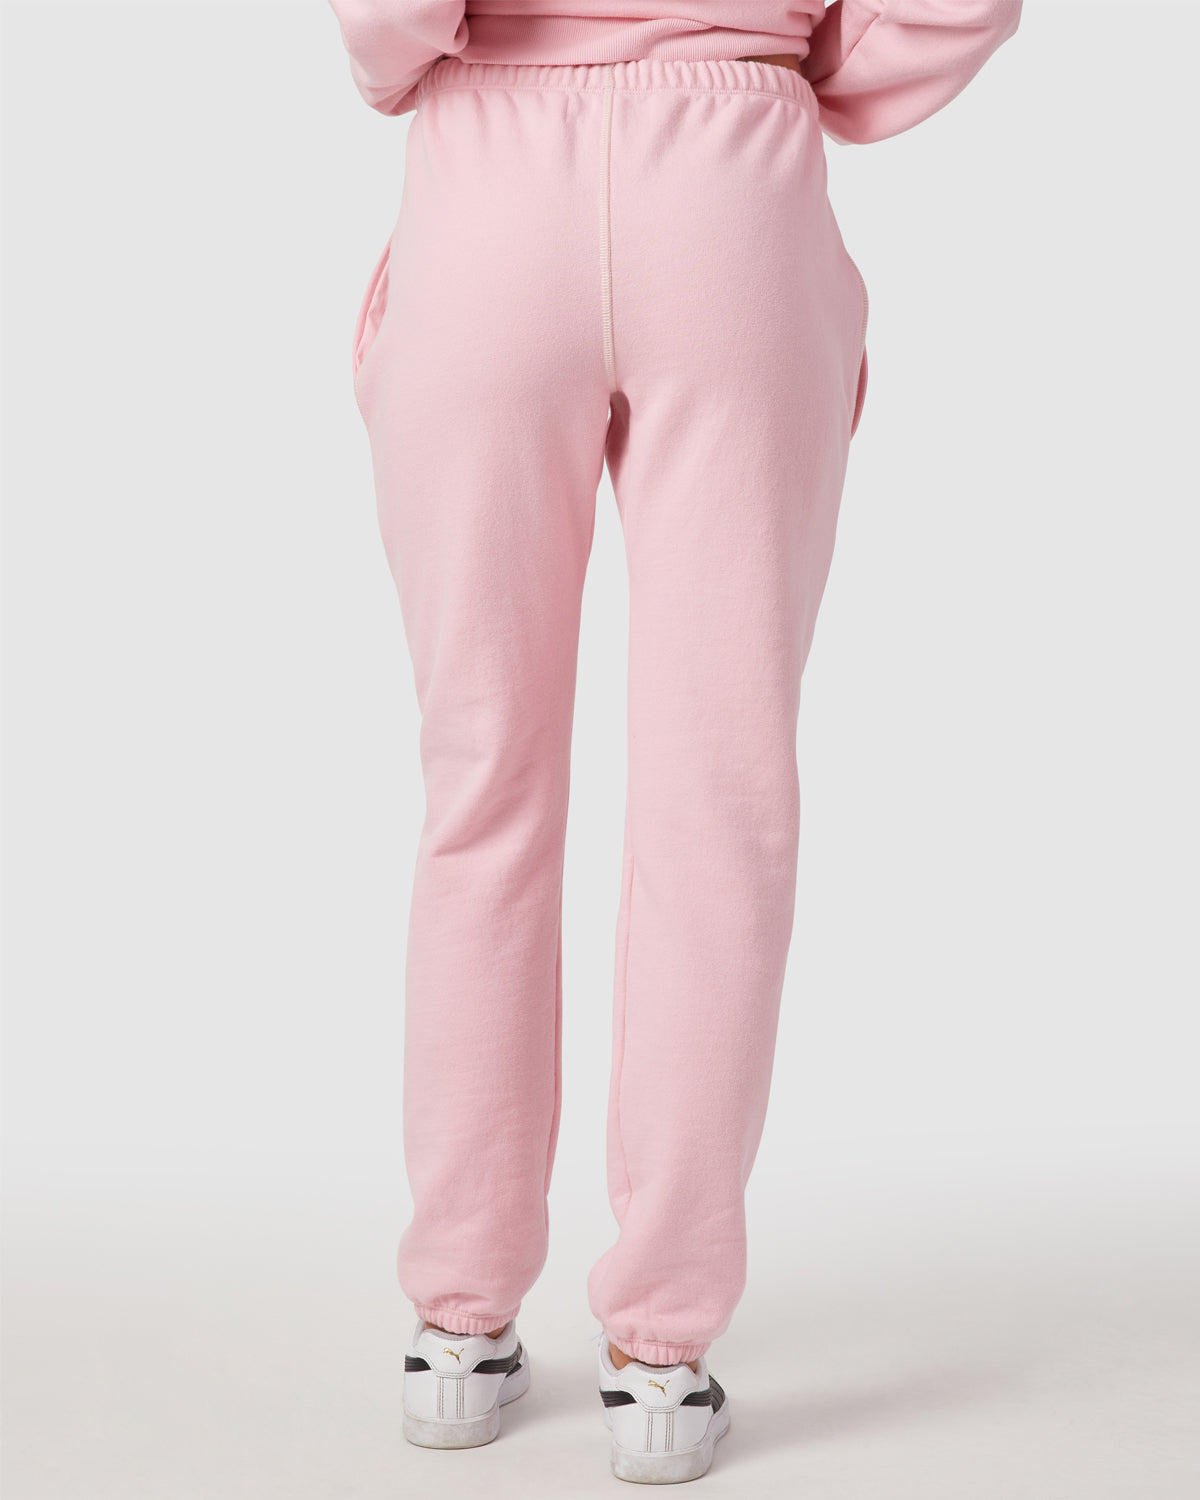 Walker Sweatpant in Candy Pink By Morgan Lane